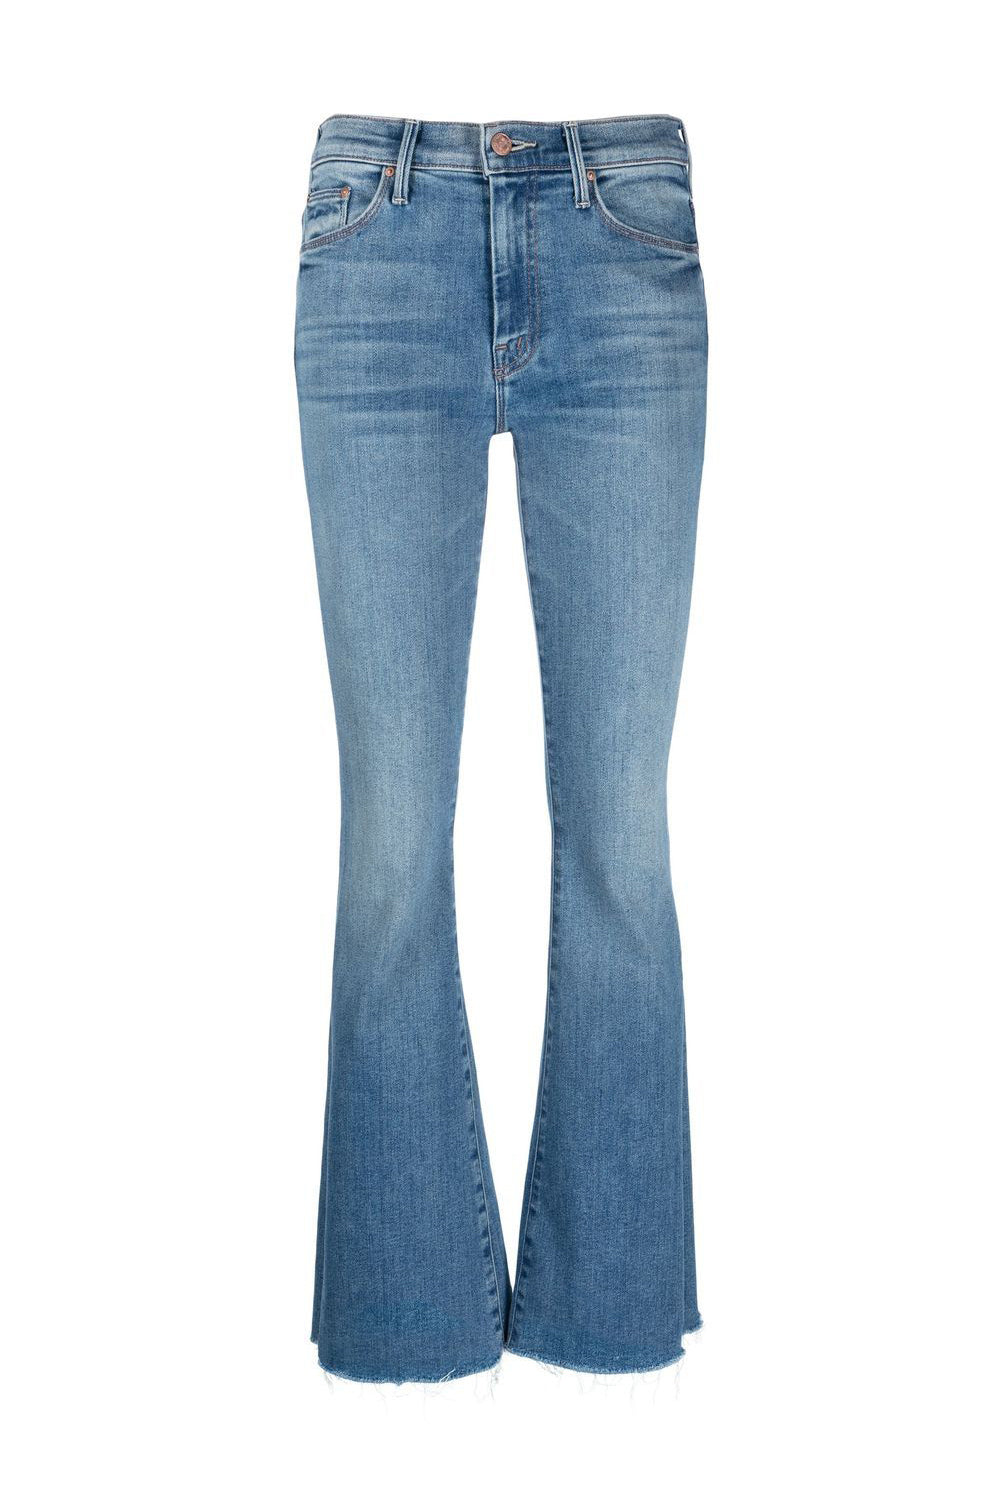 Weekender Fray flared jeans, blue wash ´groovy kind of love´